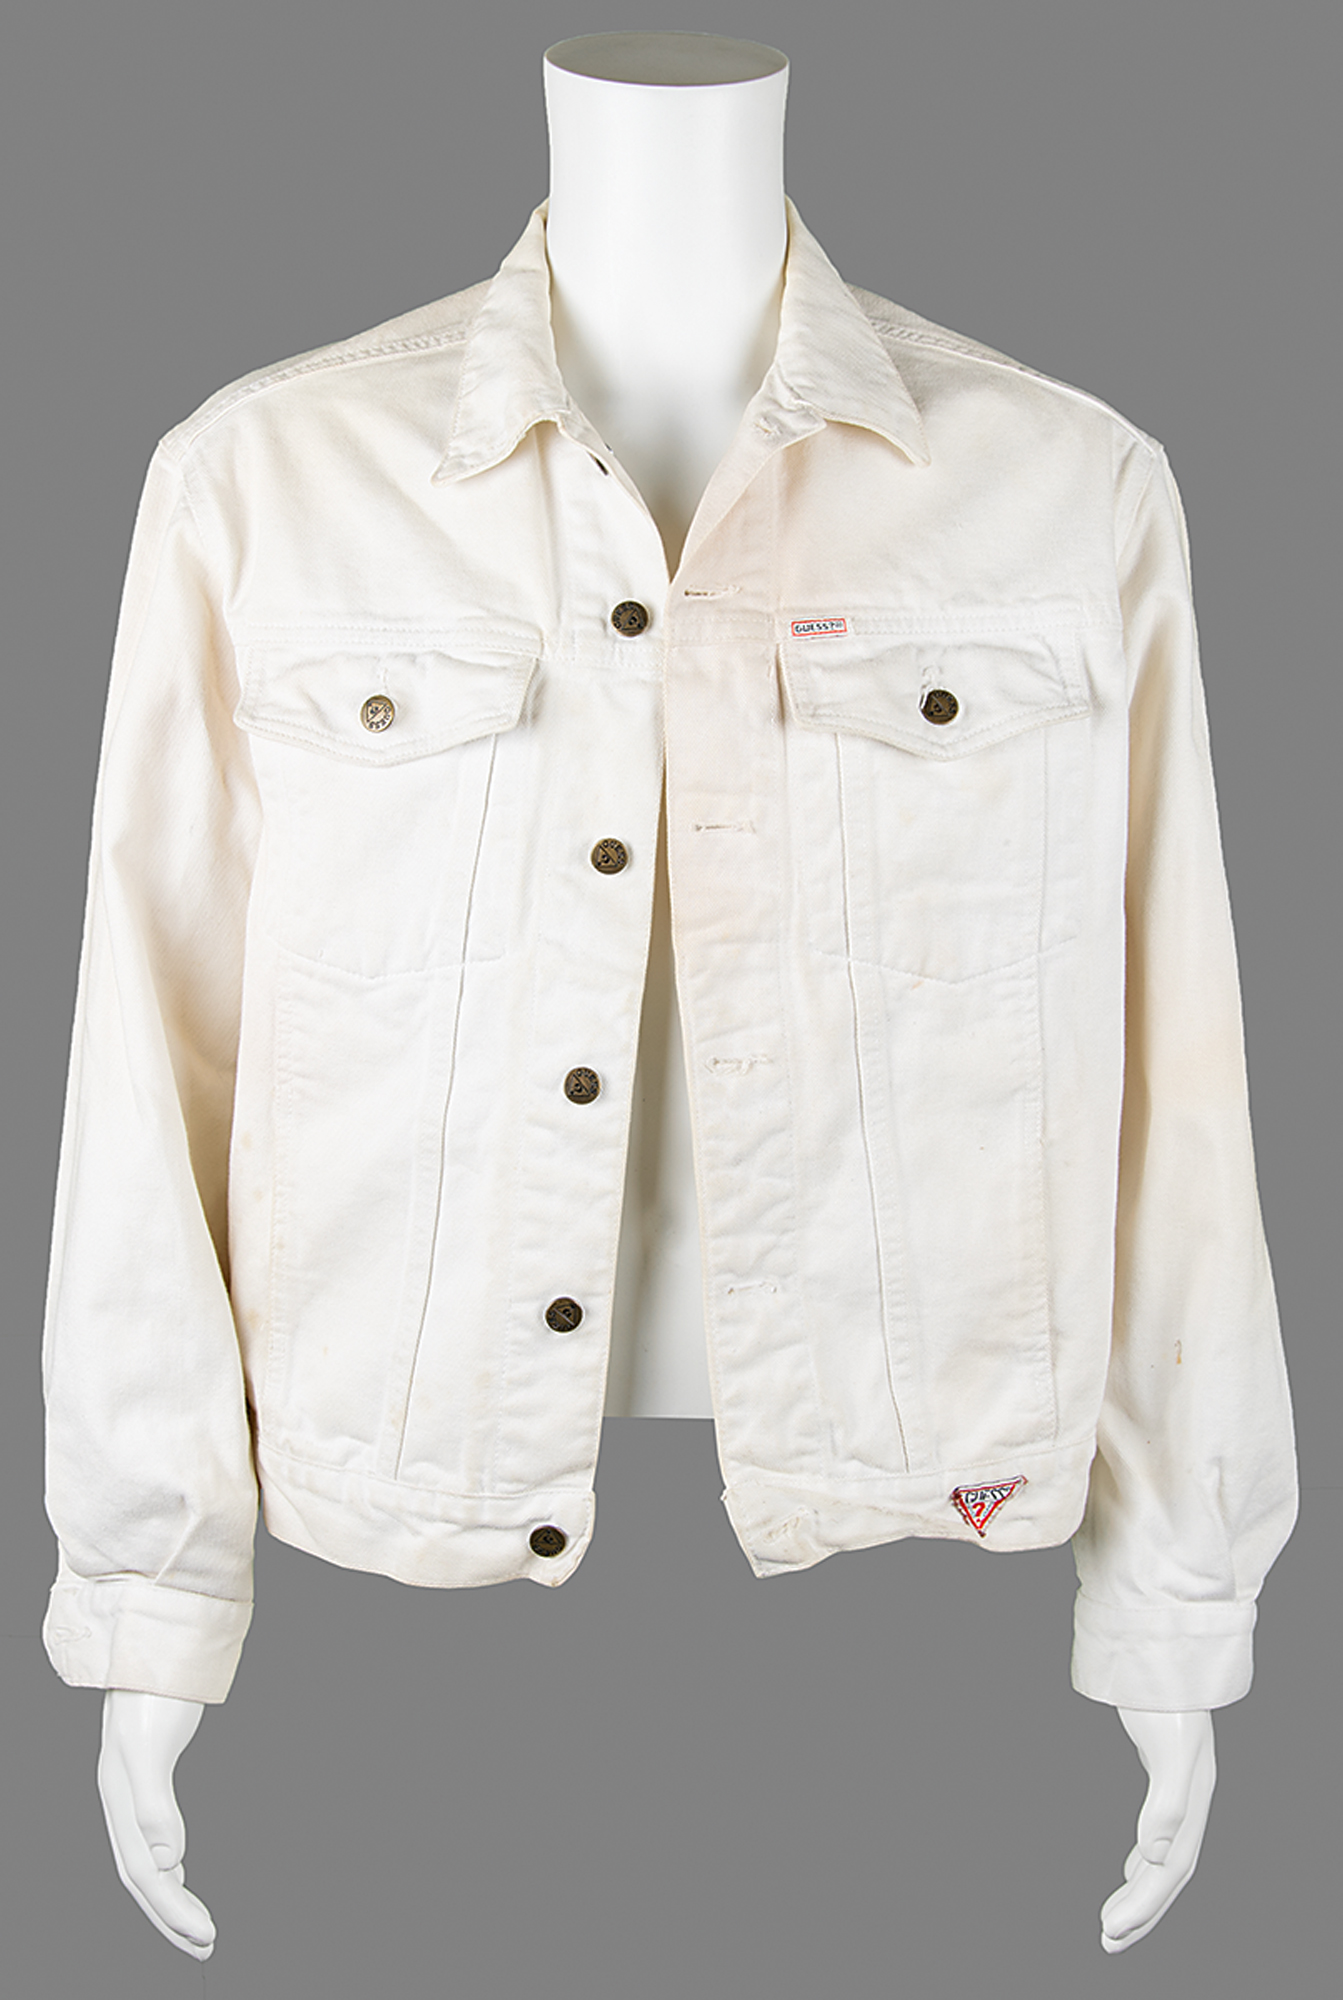 Tom Petty's White Guess Denim Jacket | RR Auction